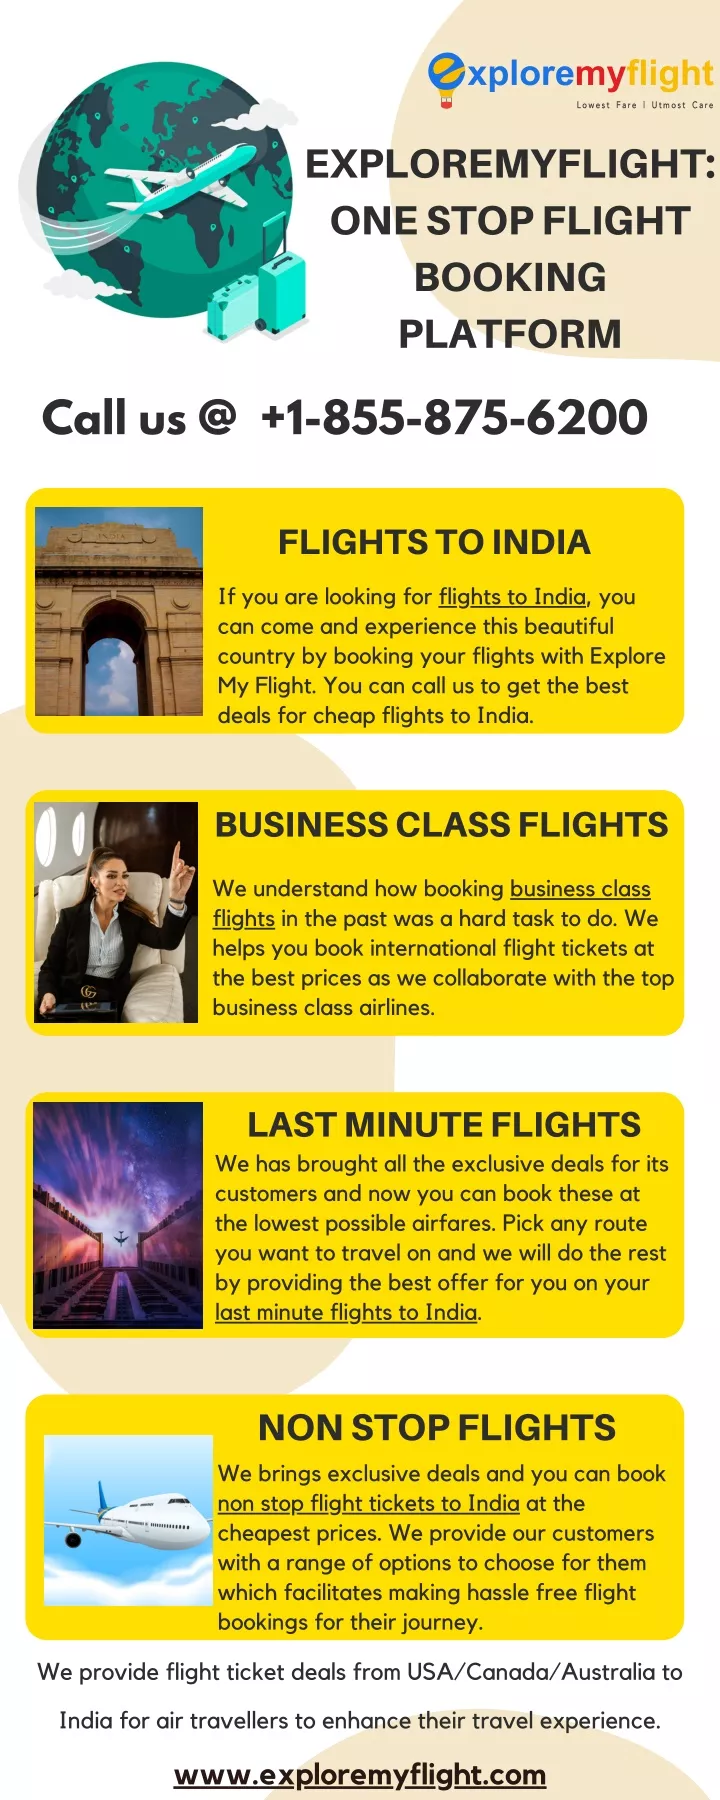 exploremyflight one stop flight booking platform